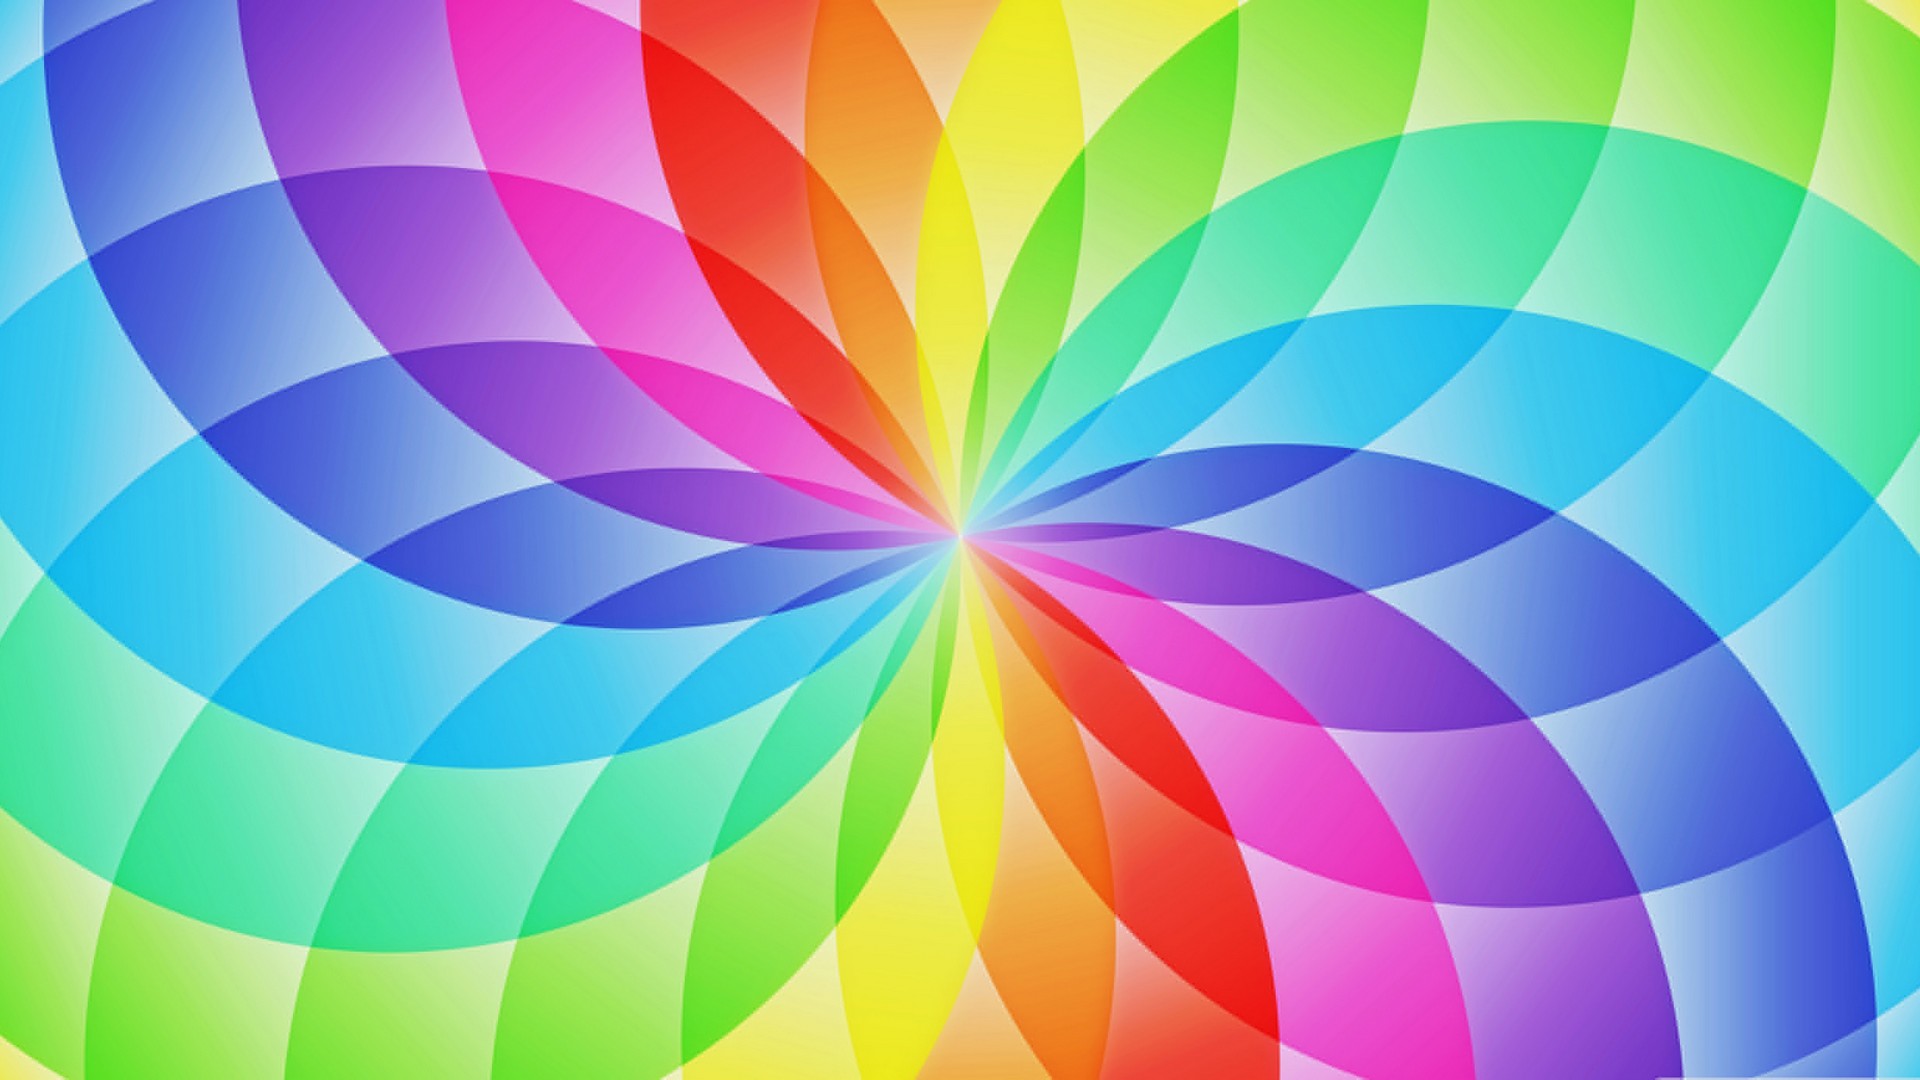 Rainbow Six Siege Wallpaper For Desktop With Image - Download Wallpaper Hd Rainbow - HD Wallpaper 